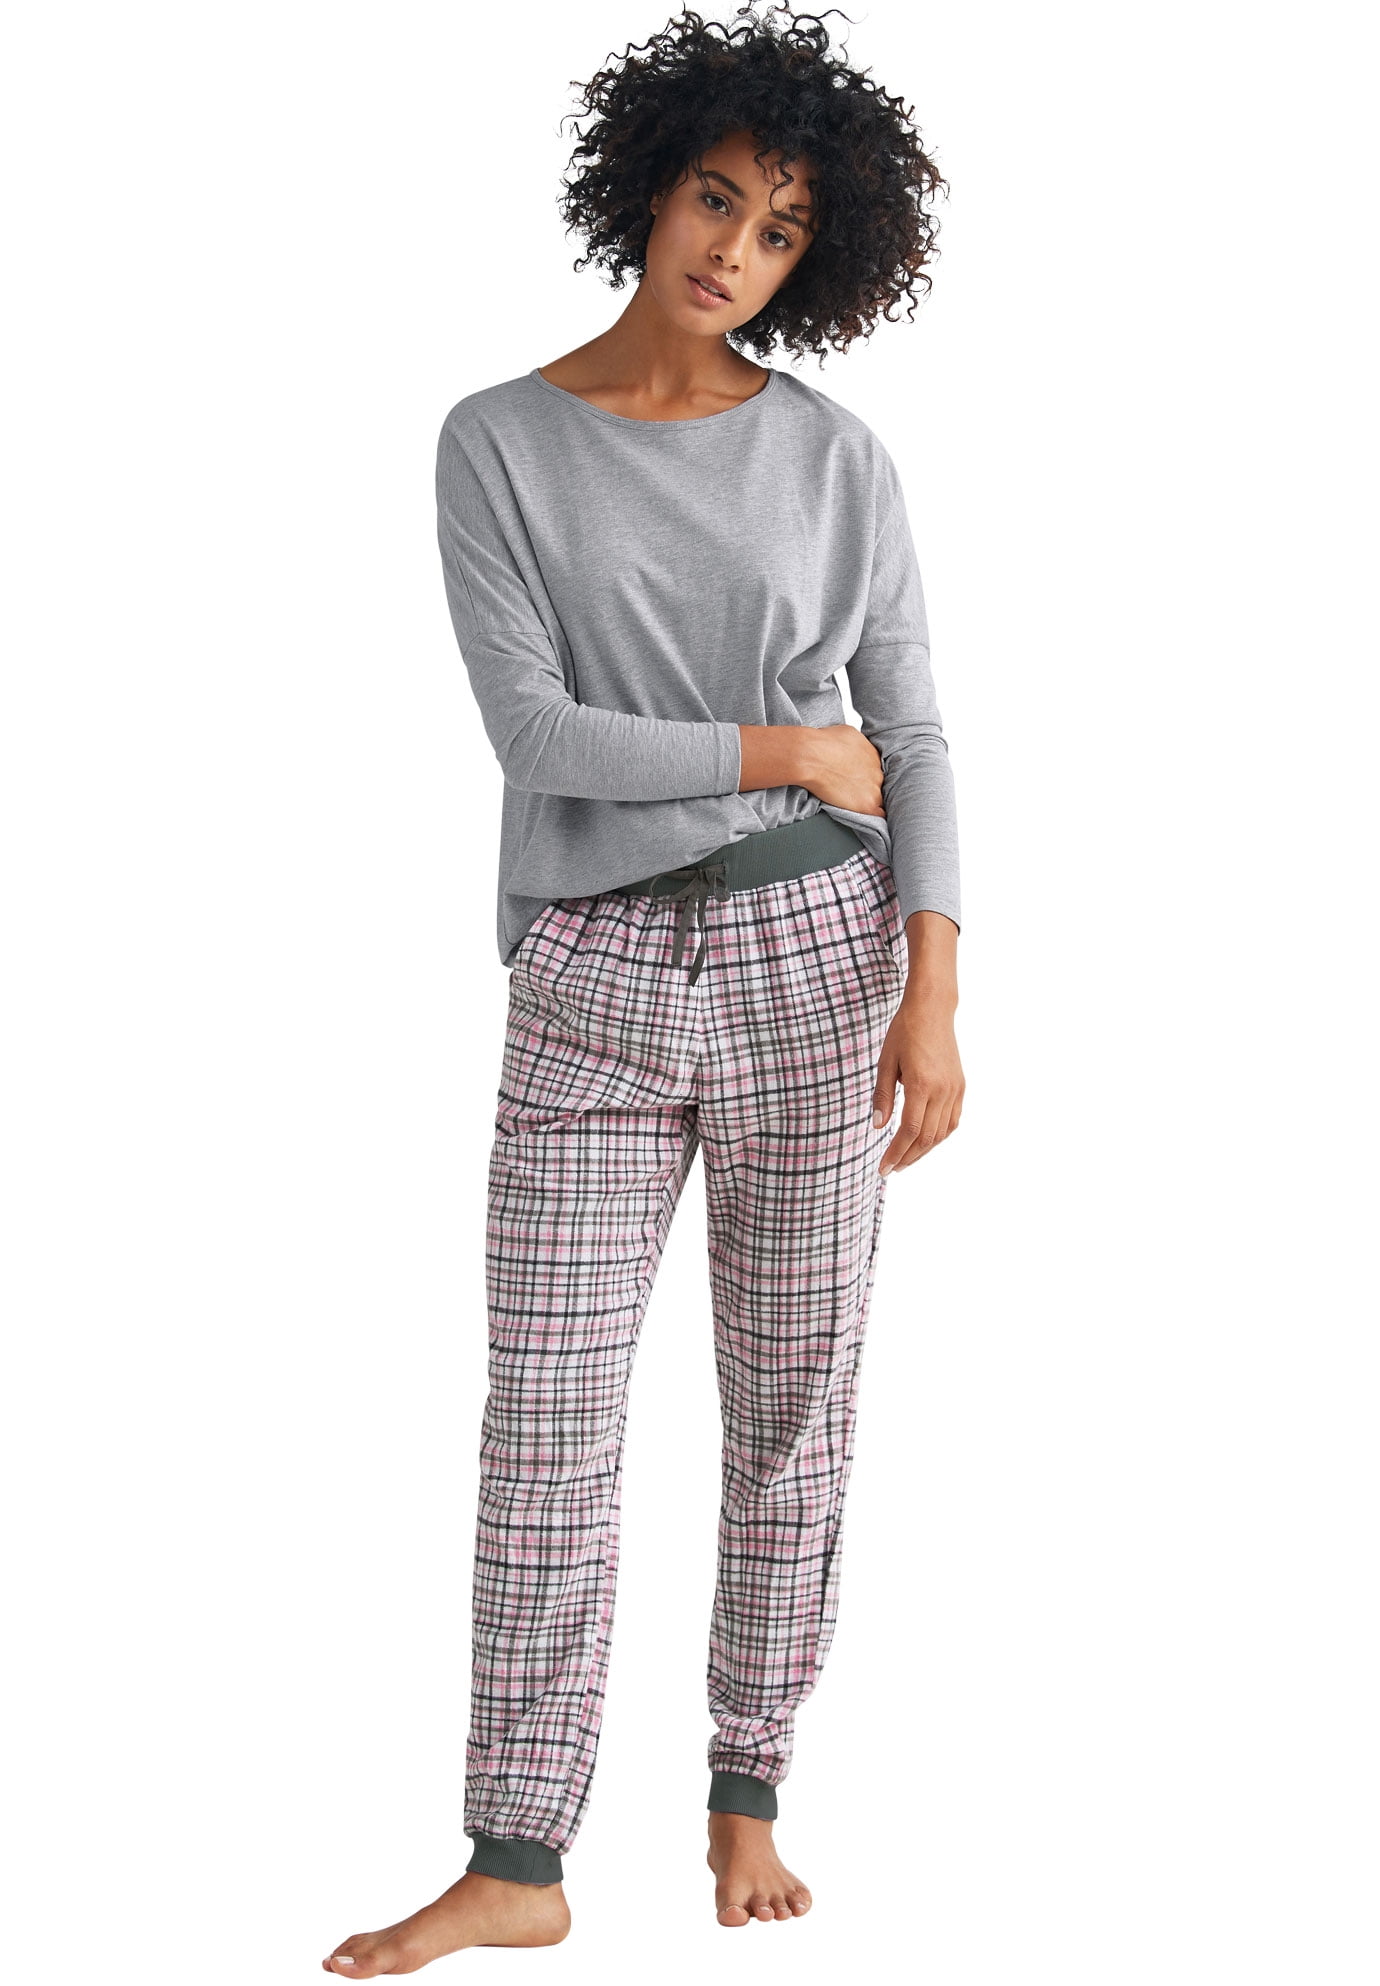 Ellos - ellos Women's Plus Size Plaid Flannel Sleep Pants Pajama ...